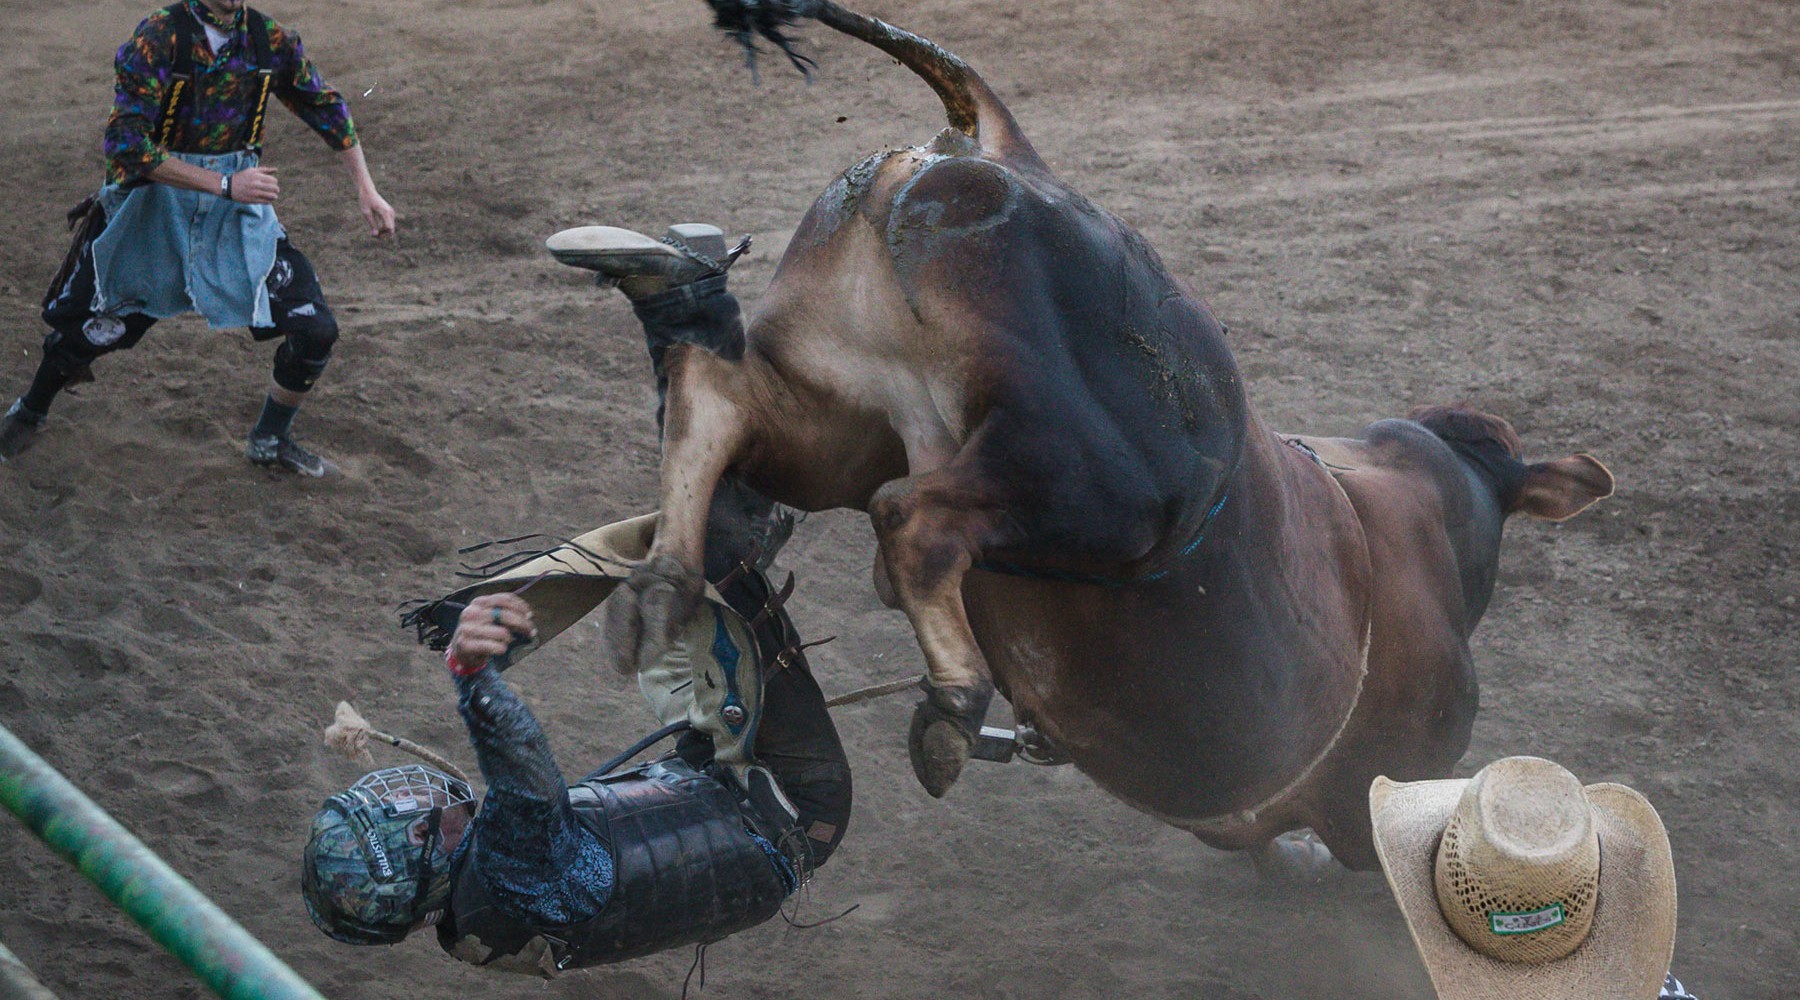 Taking a tumble, bull rider style